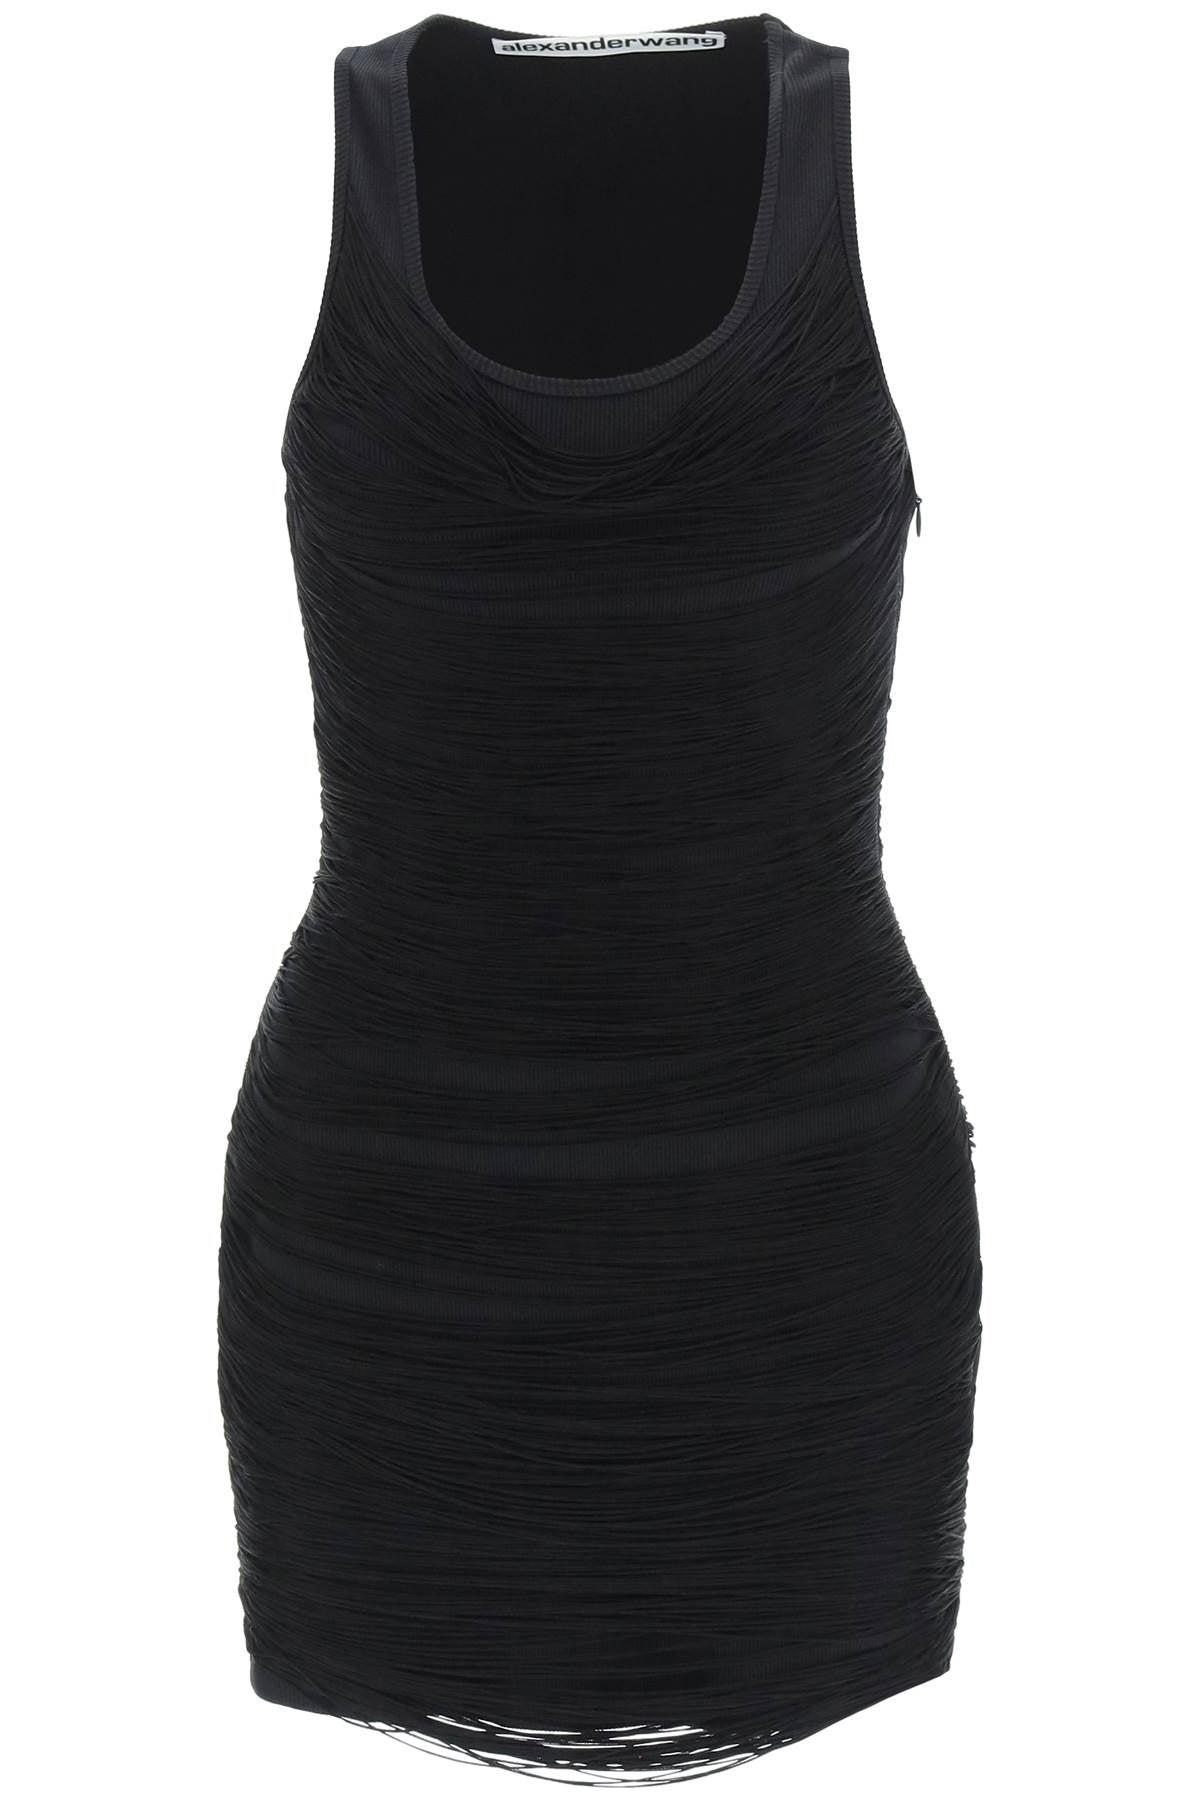 Alexander Wang Fringe Mini Dress in Black | Lyst